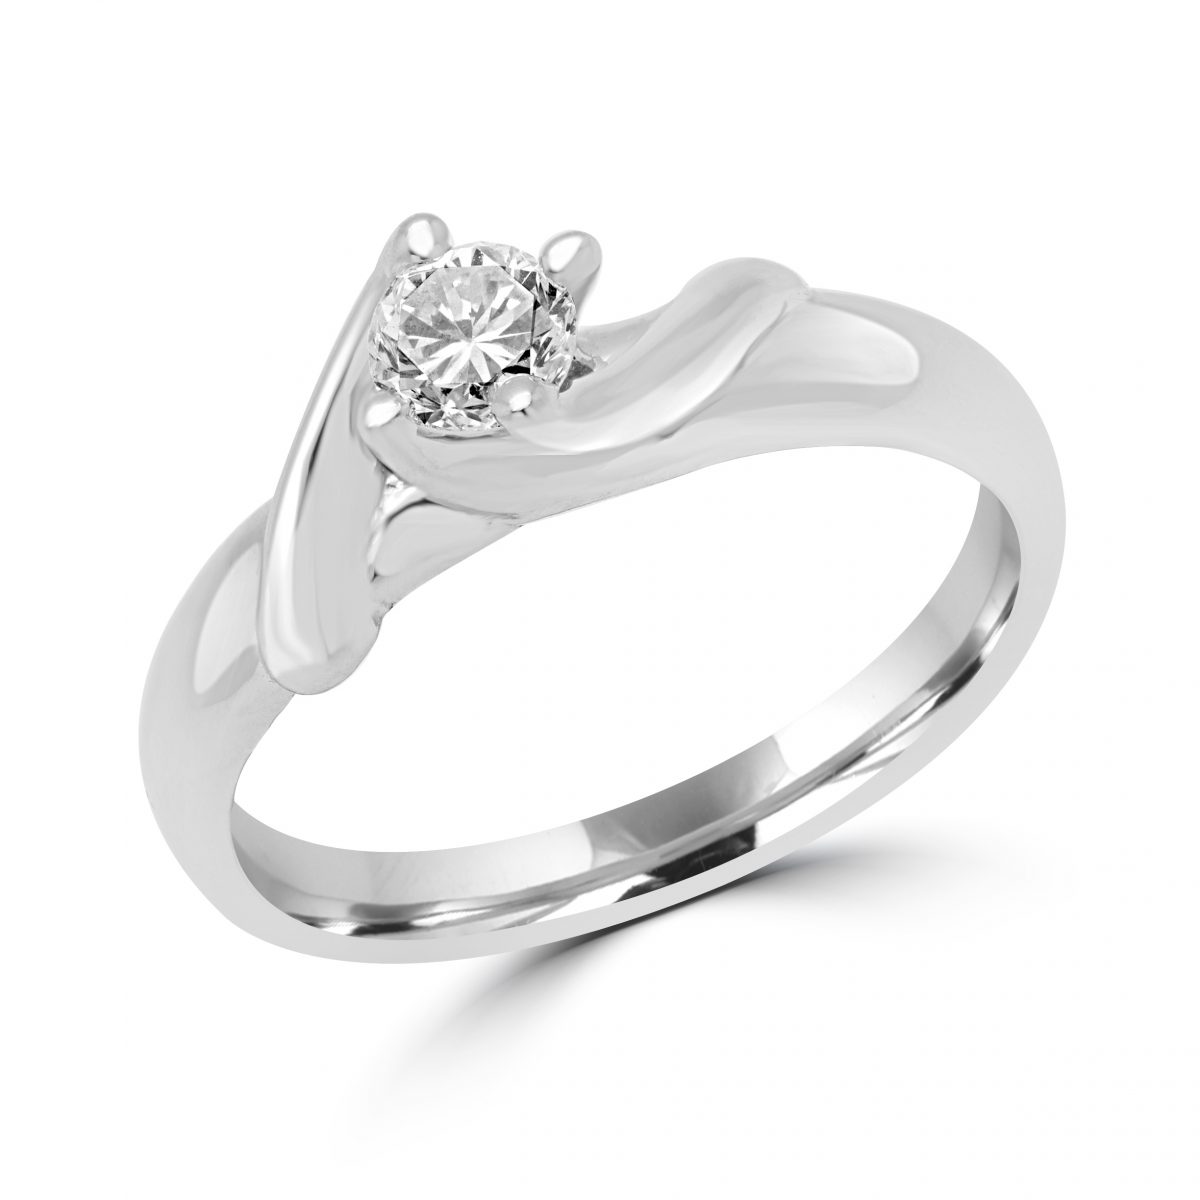 Edgy 0.30 carat diamond si g engagement 14k white gold ring